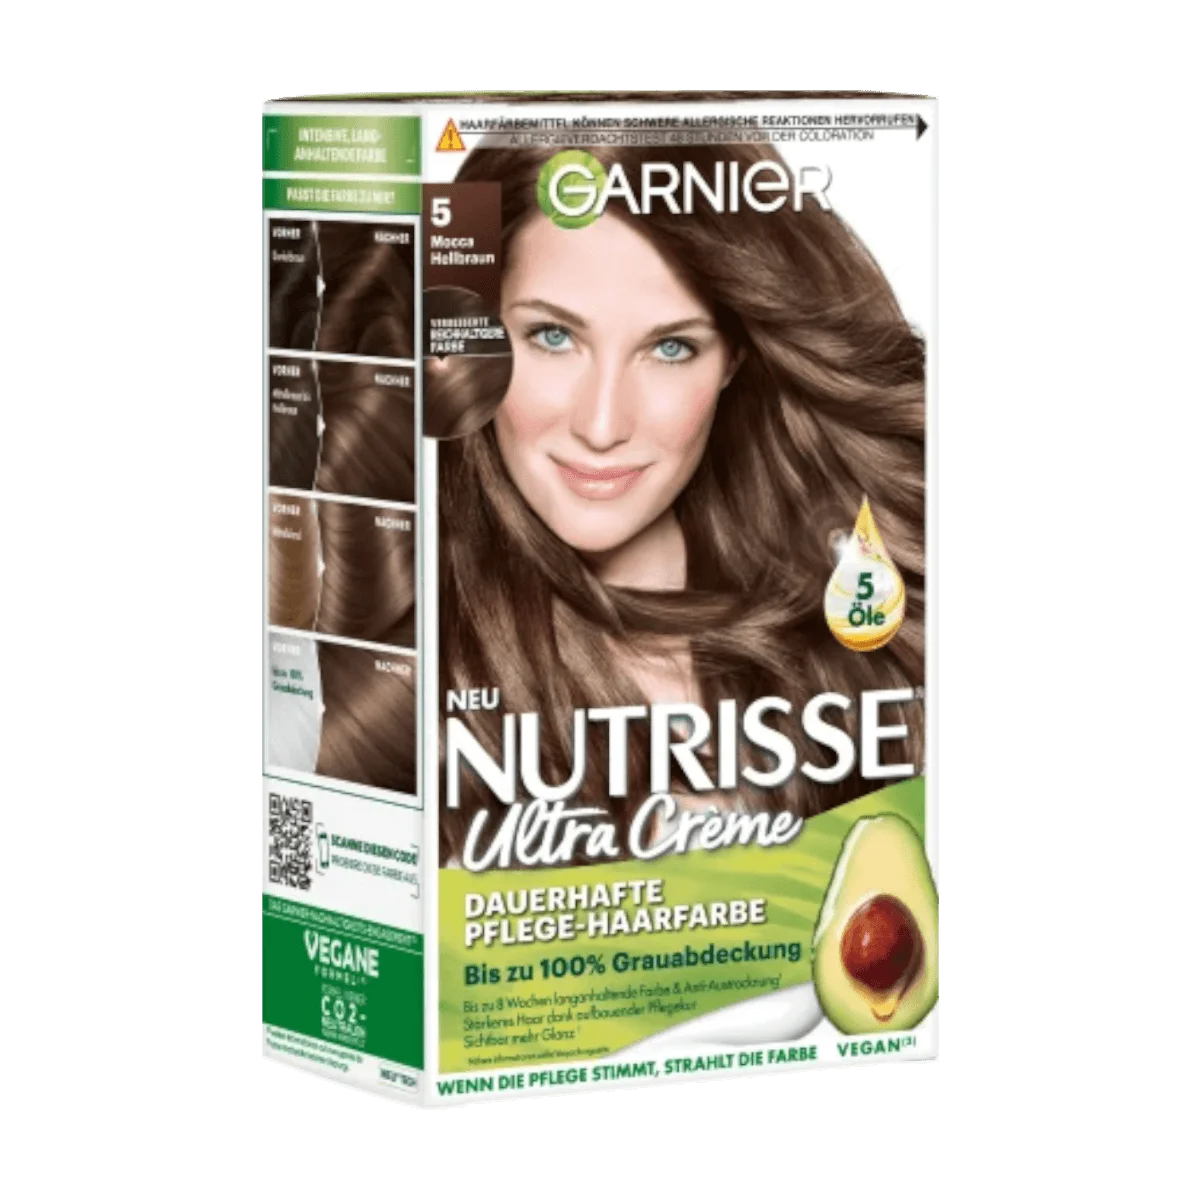 Garnier Nutrisse Ultra Creme Haarfarbe 5 Mocca Hellbraun, 1 Stk